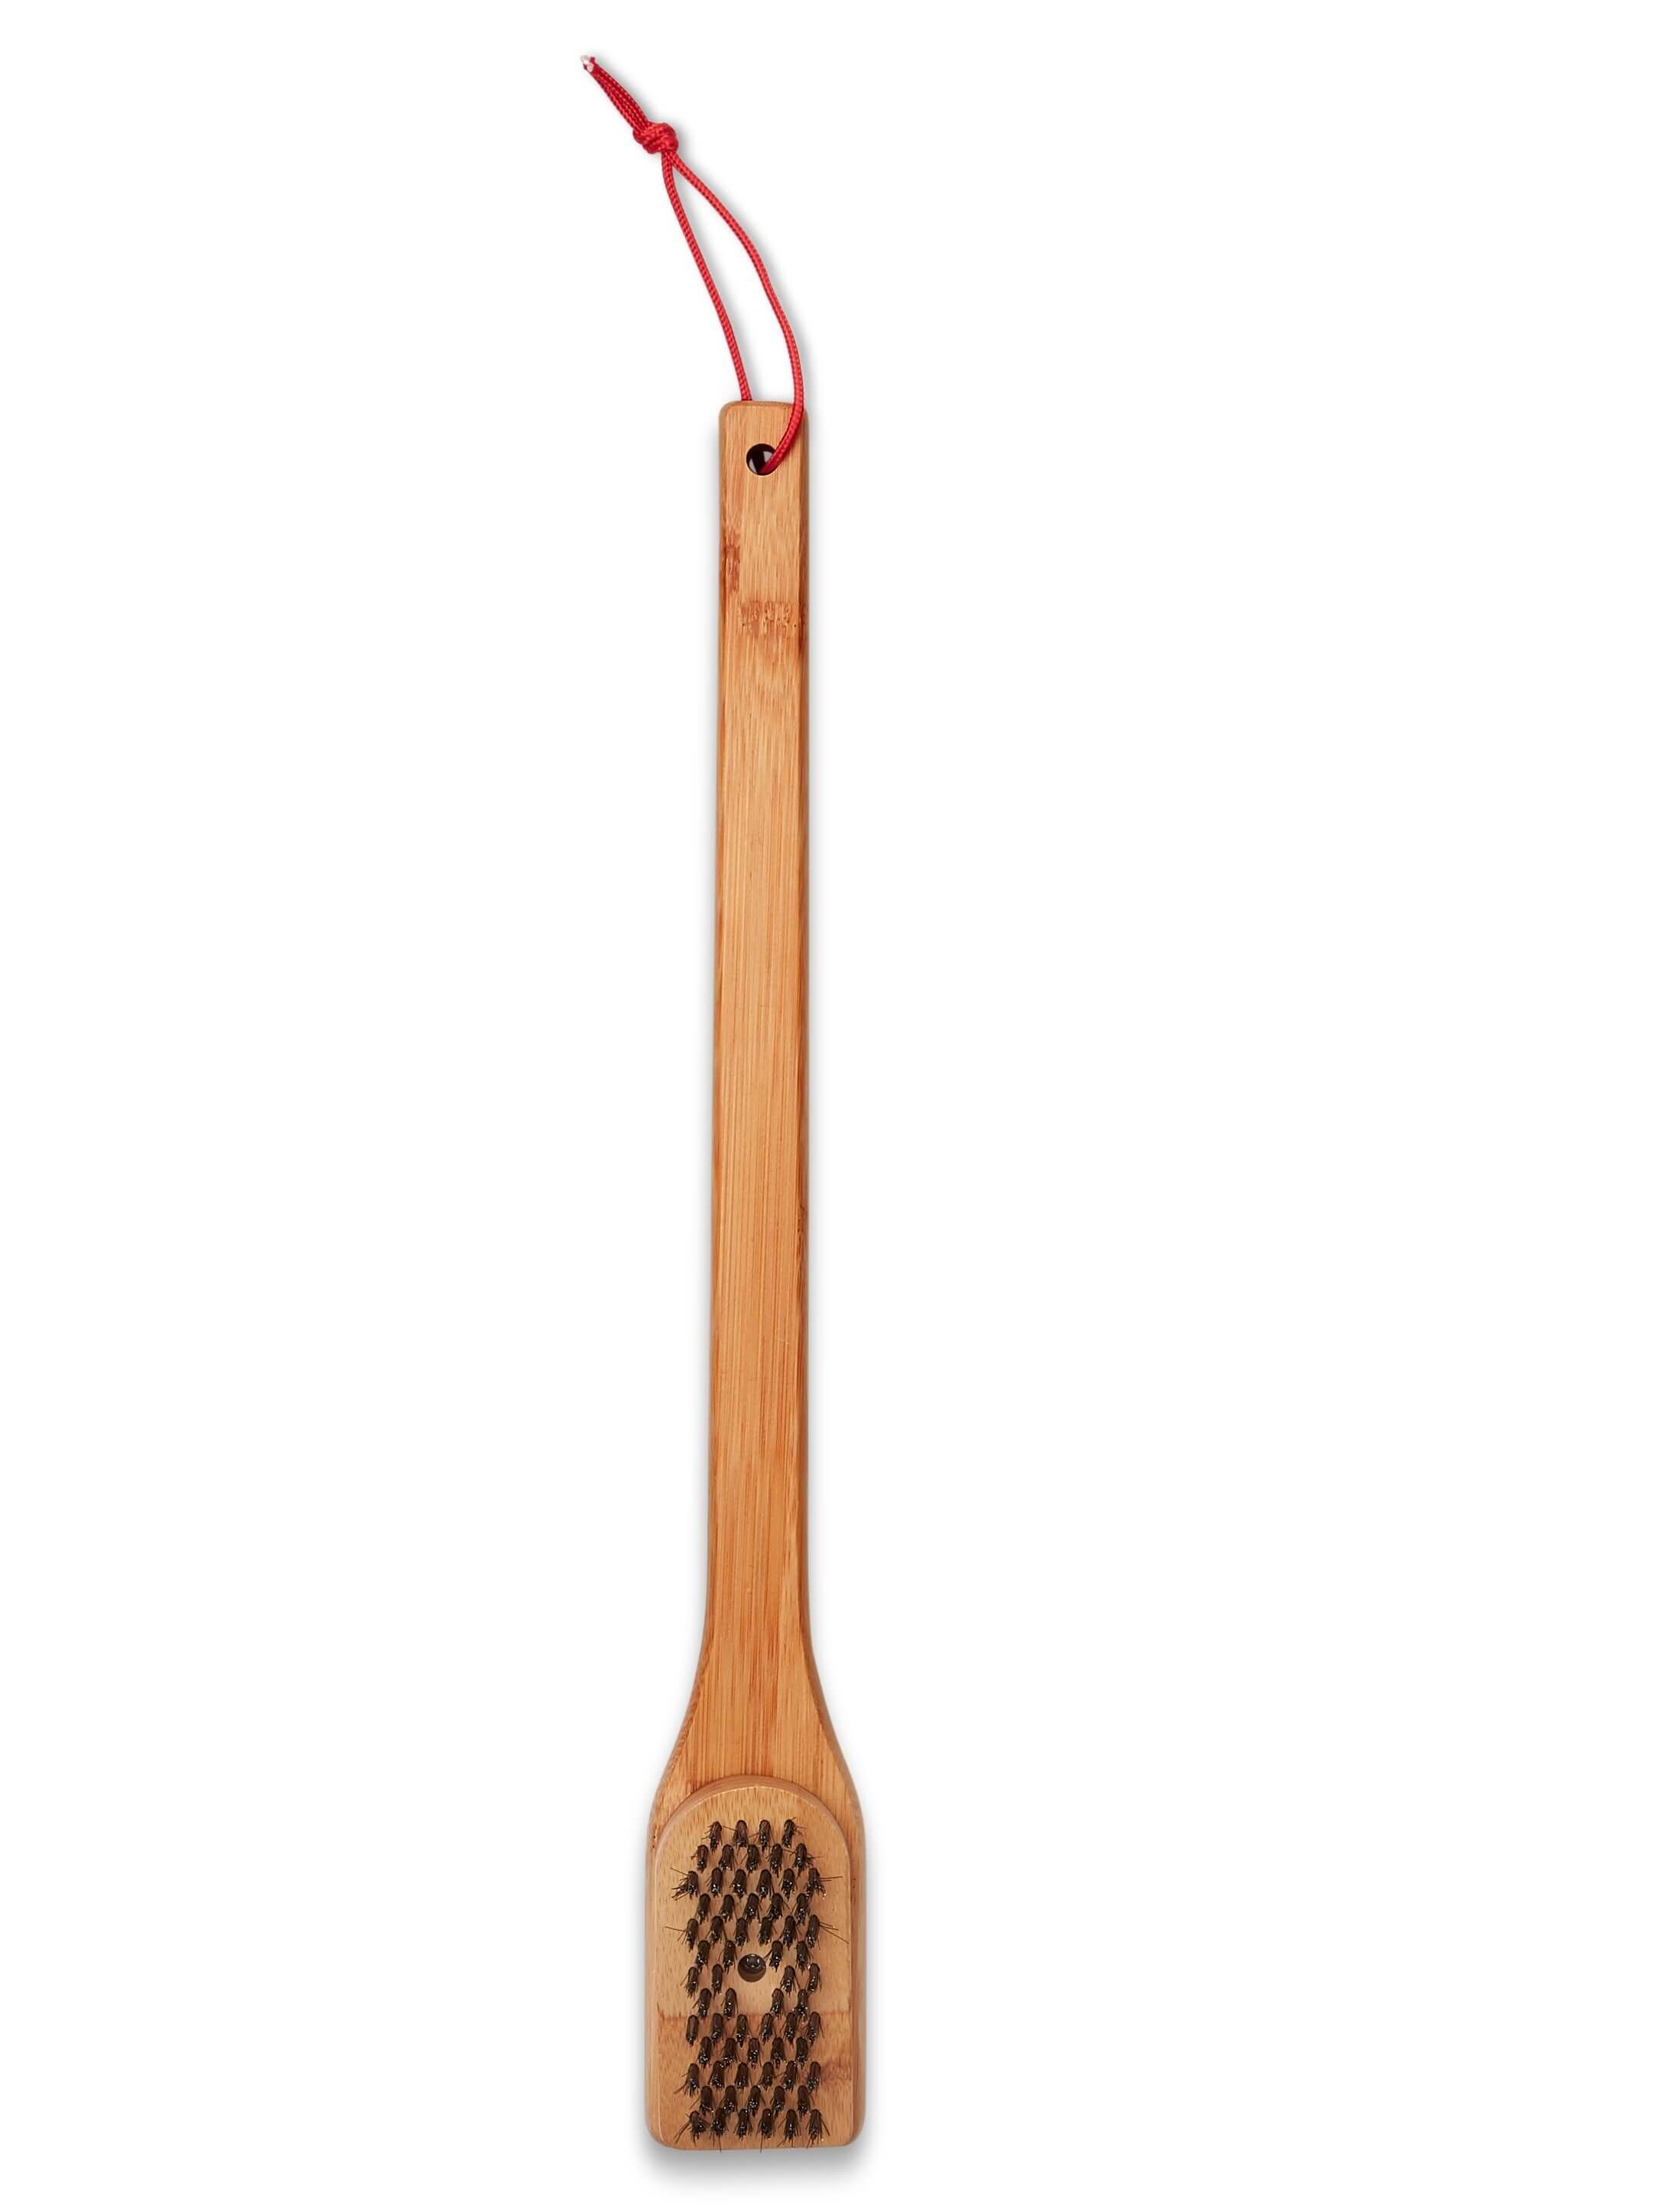 Weber Grillbürste mit Bambusholzgriff, 46 cm 6276